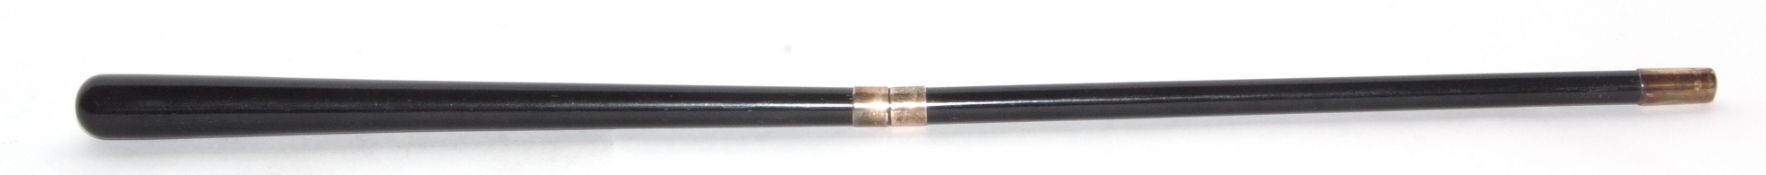 Cased Edward VII silver mounted conductor's baton, London 1902, maker's mark J Howell & Co Ltd